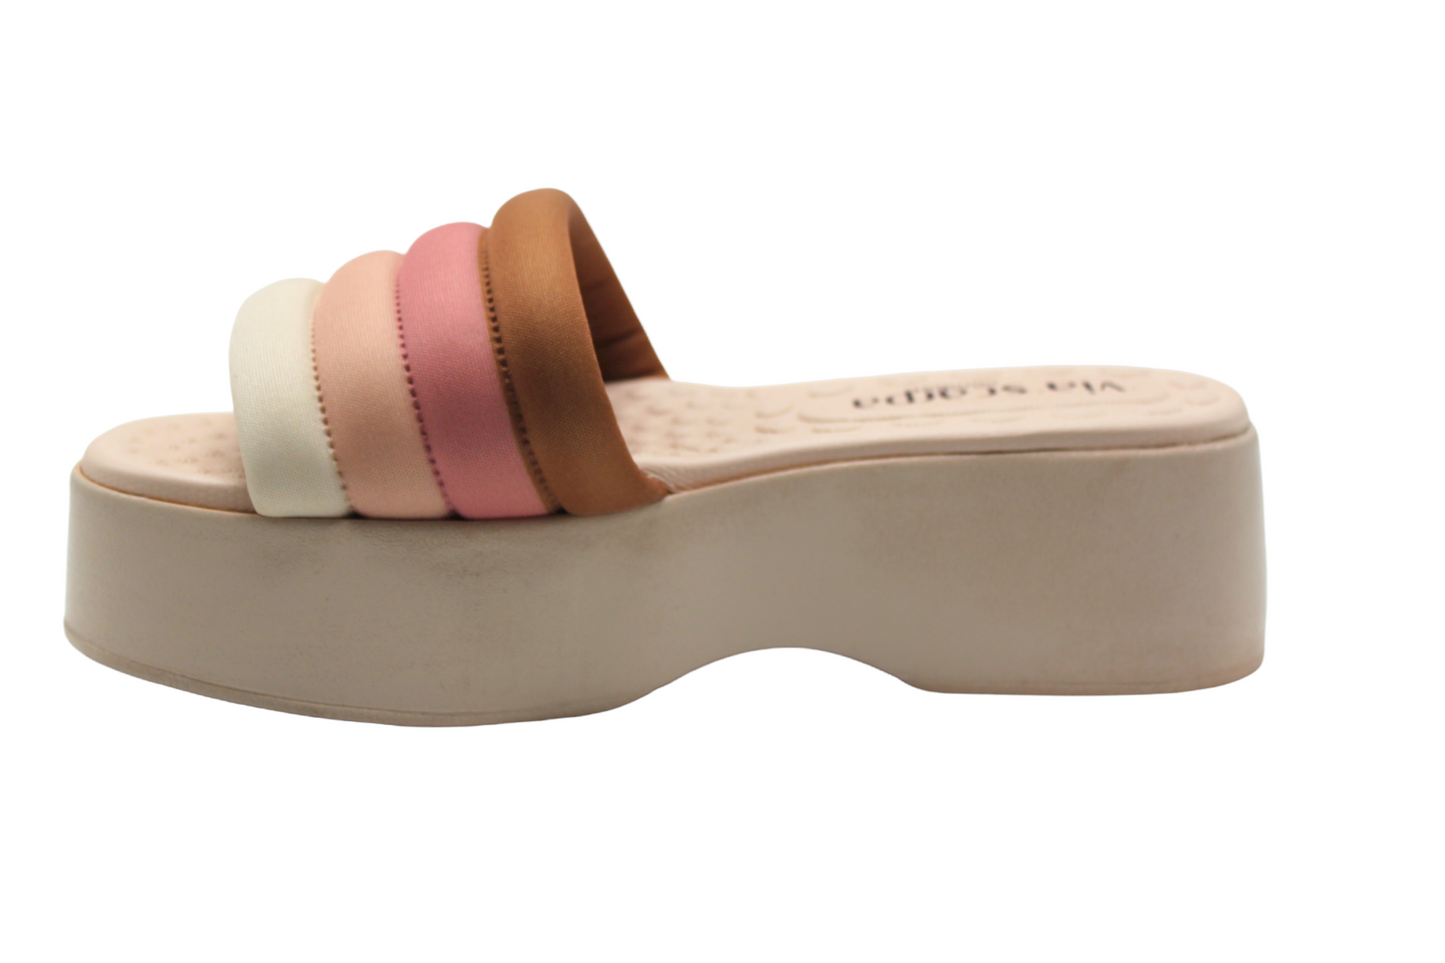 Slip On Pink/White Striped Platform Sandals